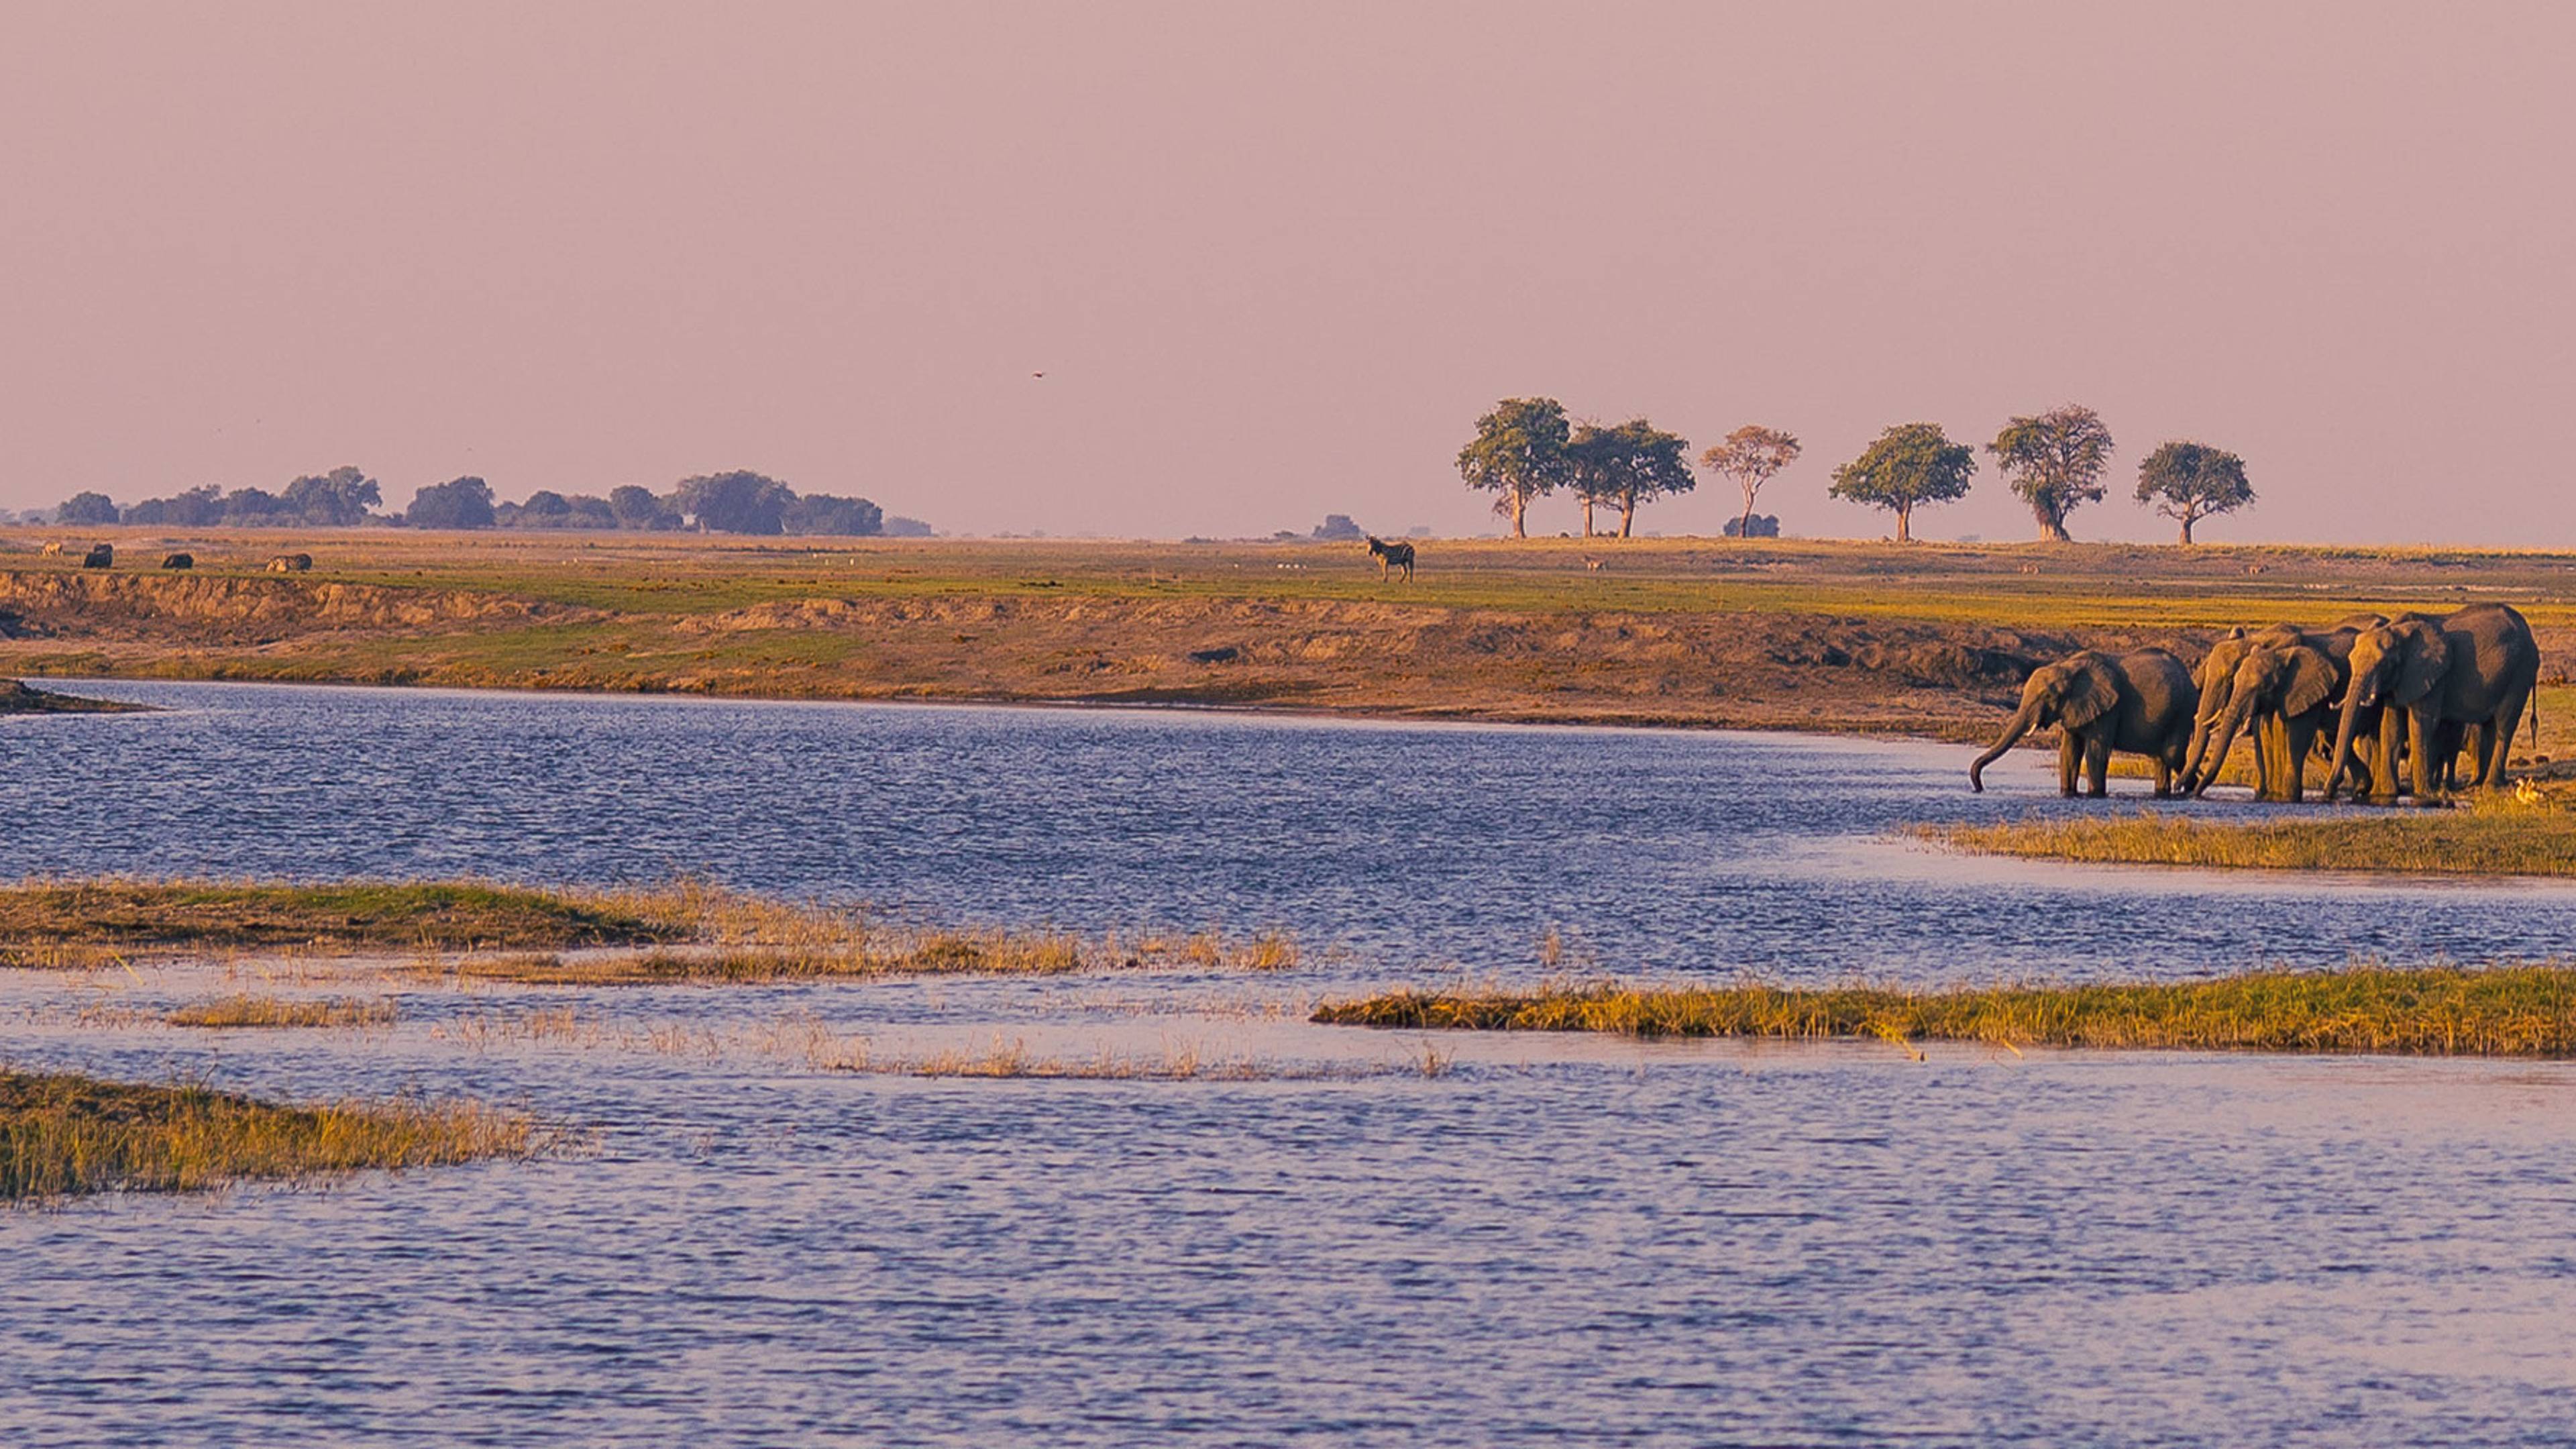 Boat cruise and wildlife safari on Chobe River, Namibia Bots